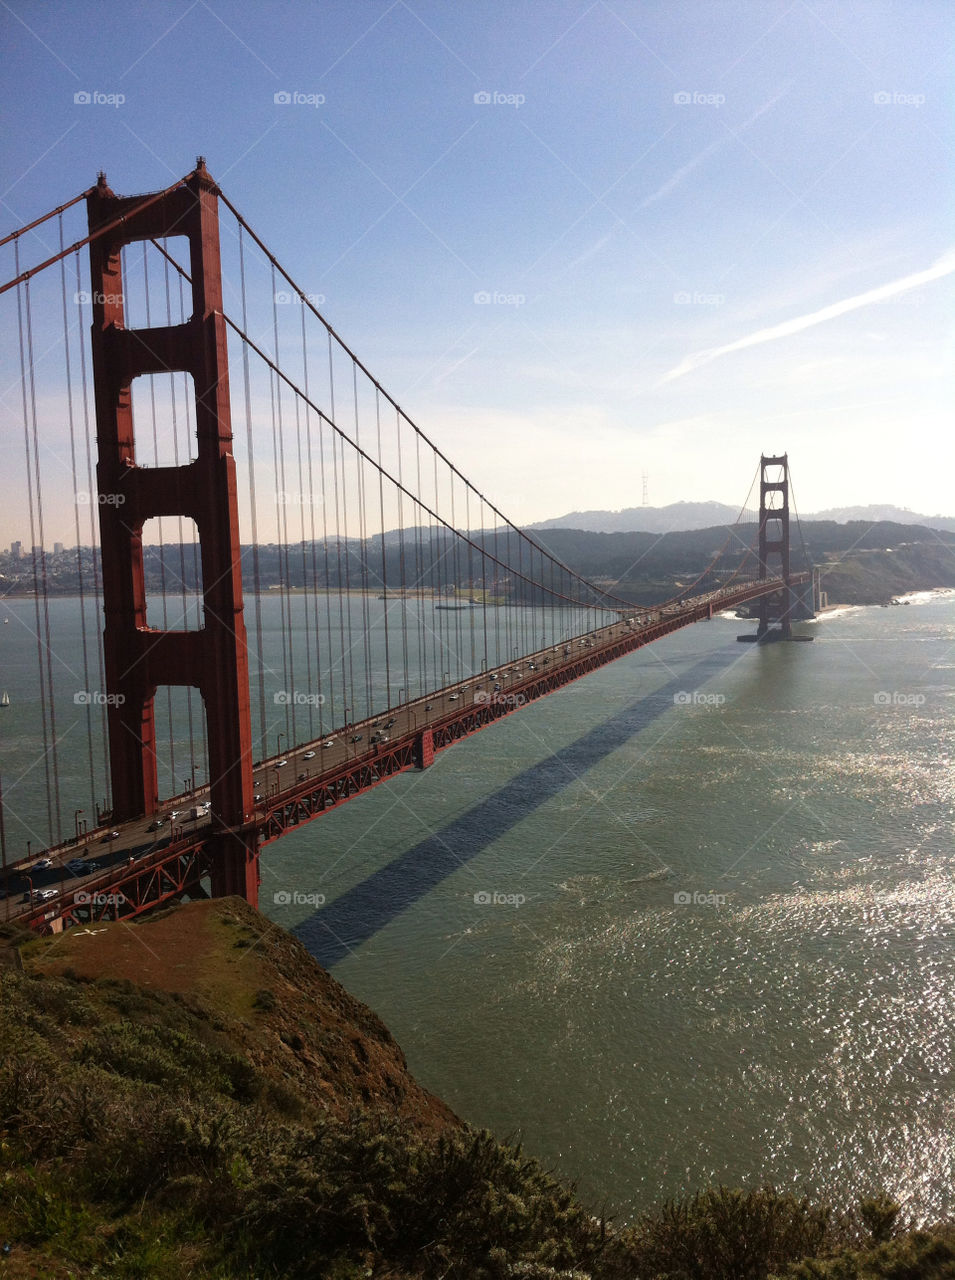 ocean city bridge california by jitoburrito